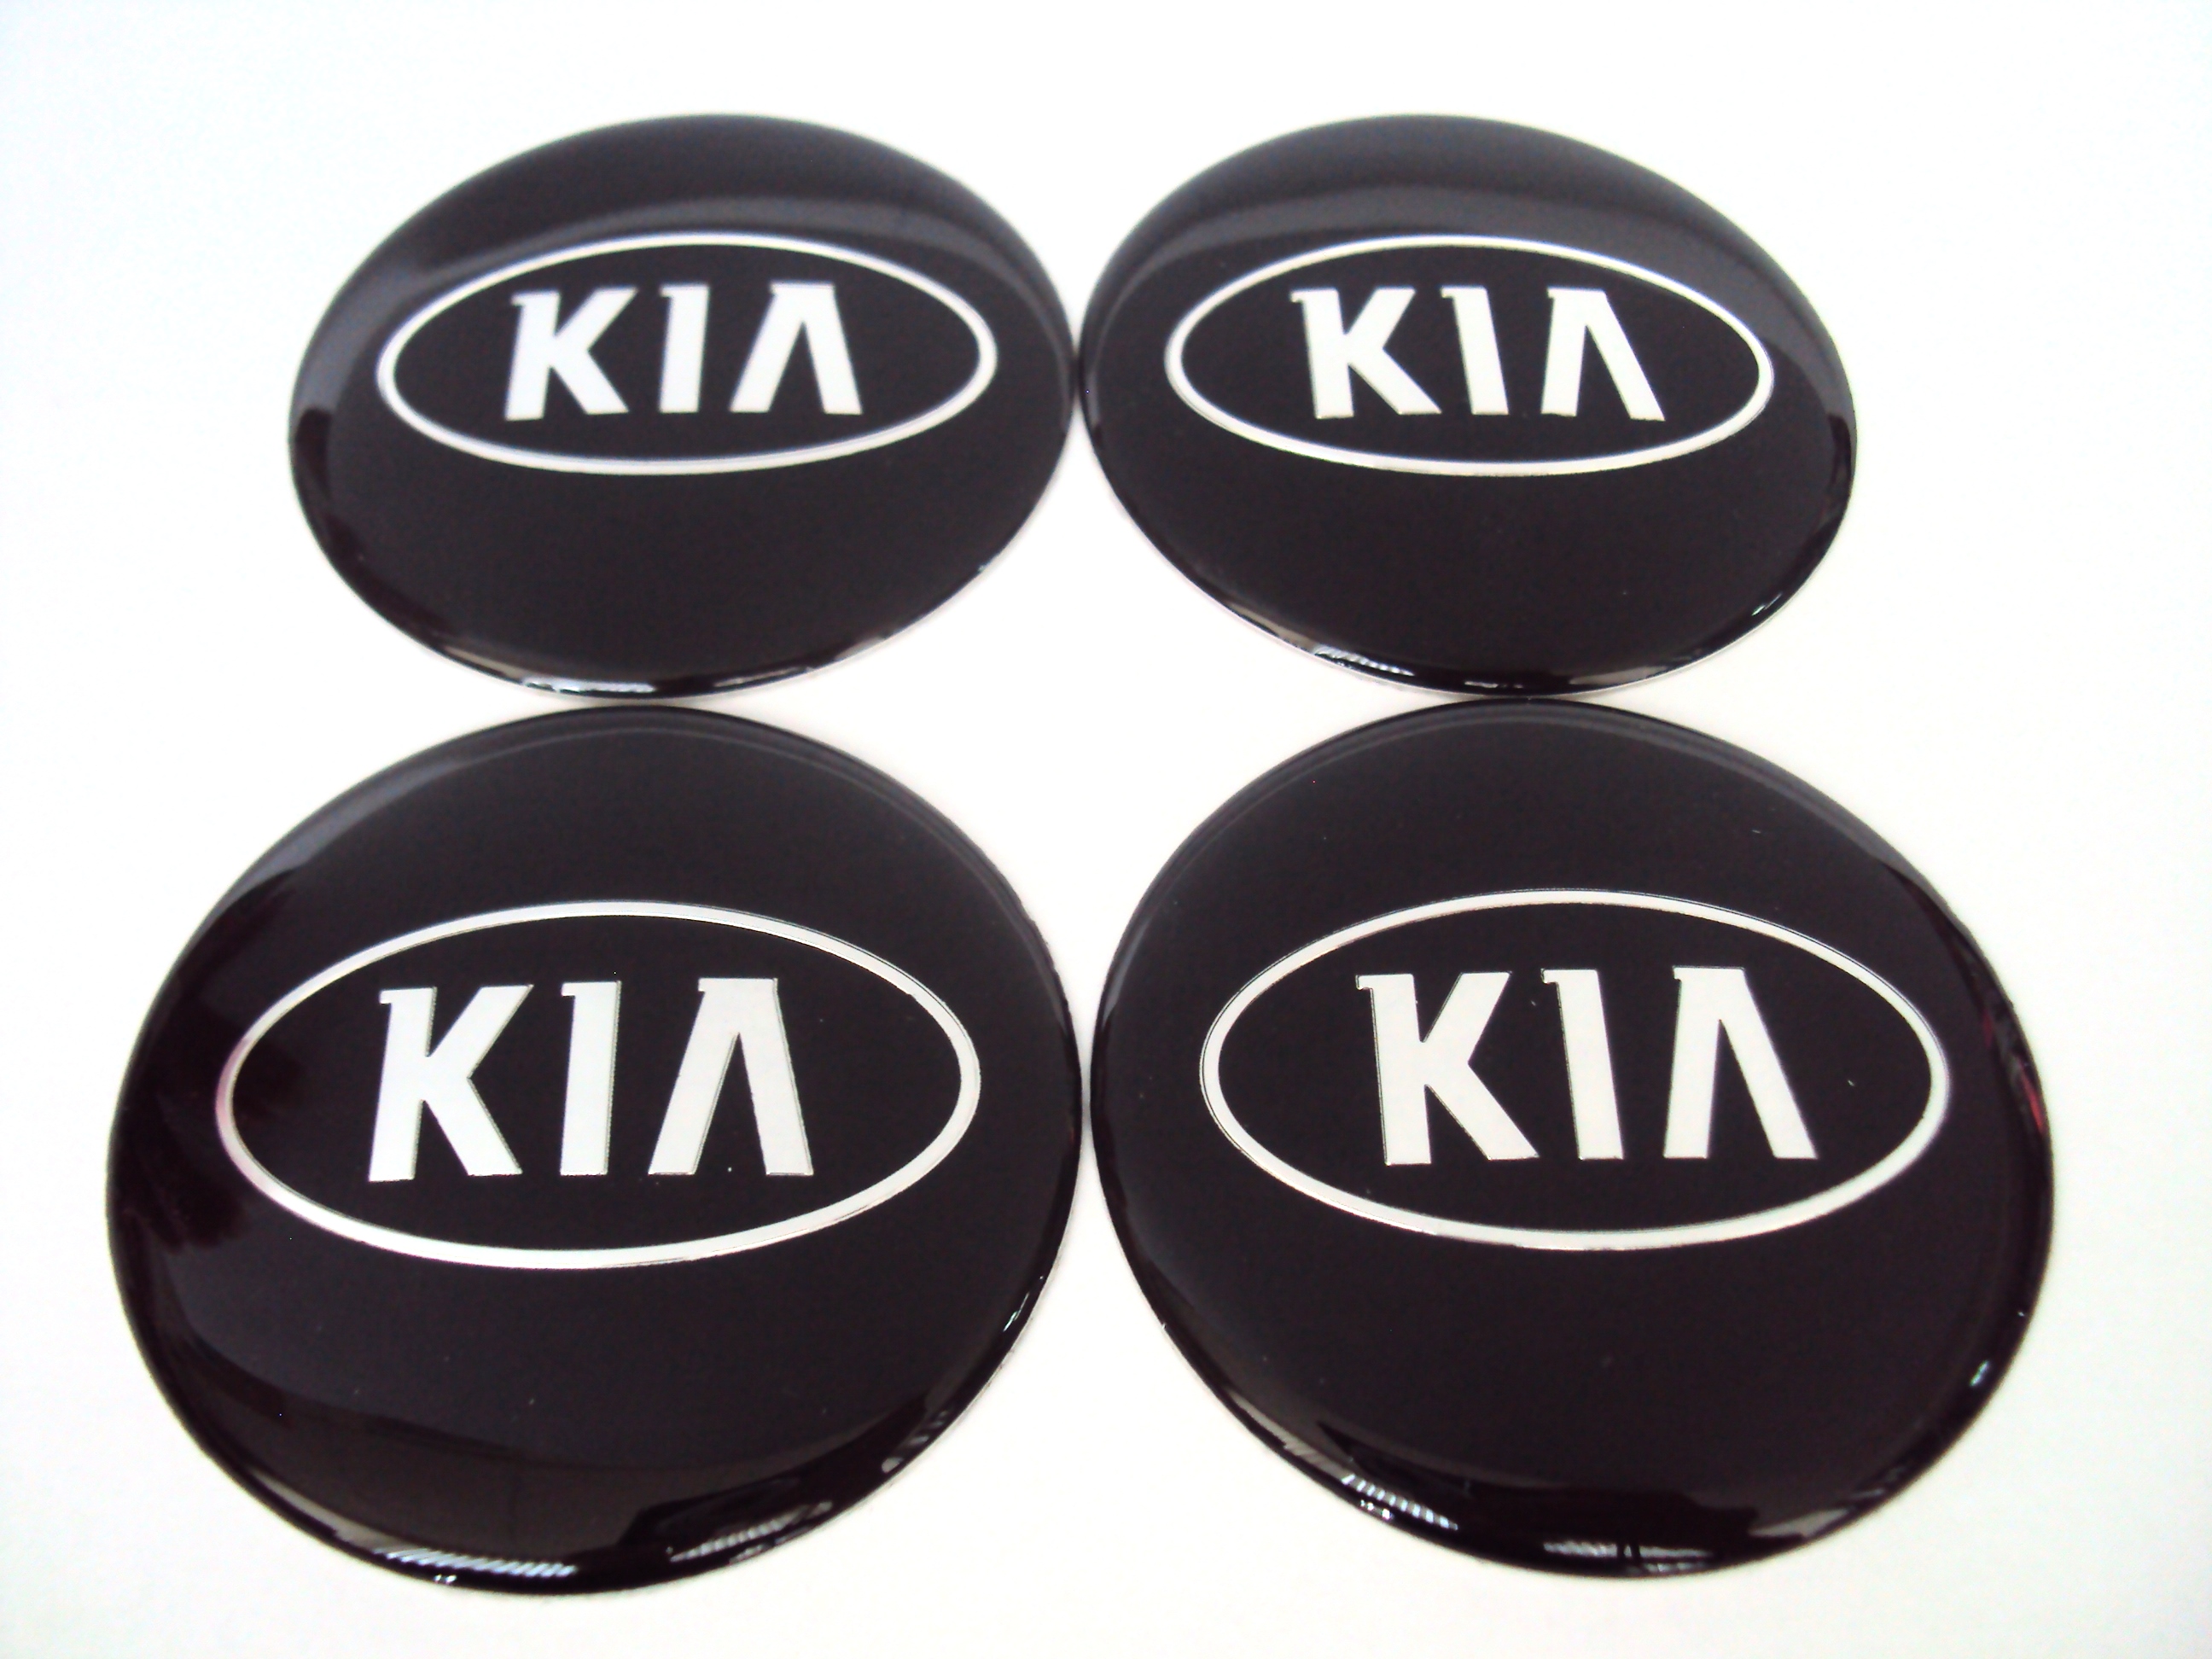 Купить логотип на диски. Заглушки на литые диски Kia колпачки в диск Киа. Заглушка литого диска Киа. Заглушка колесного диска 147мм. Заглушка колпачок на литой диск Kia.